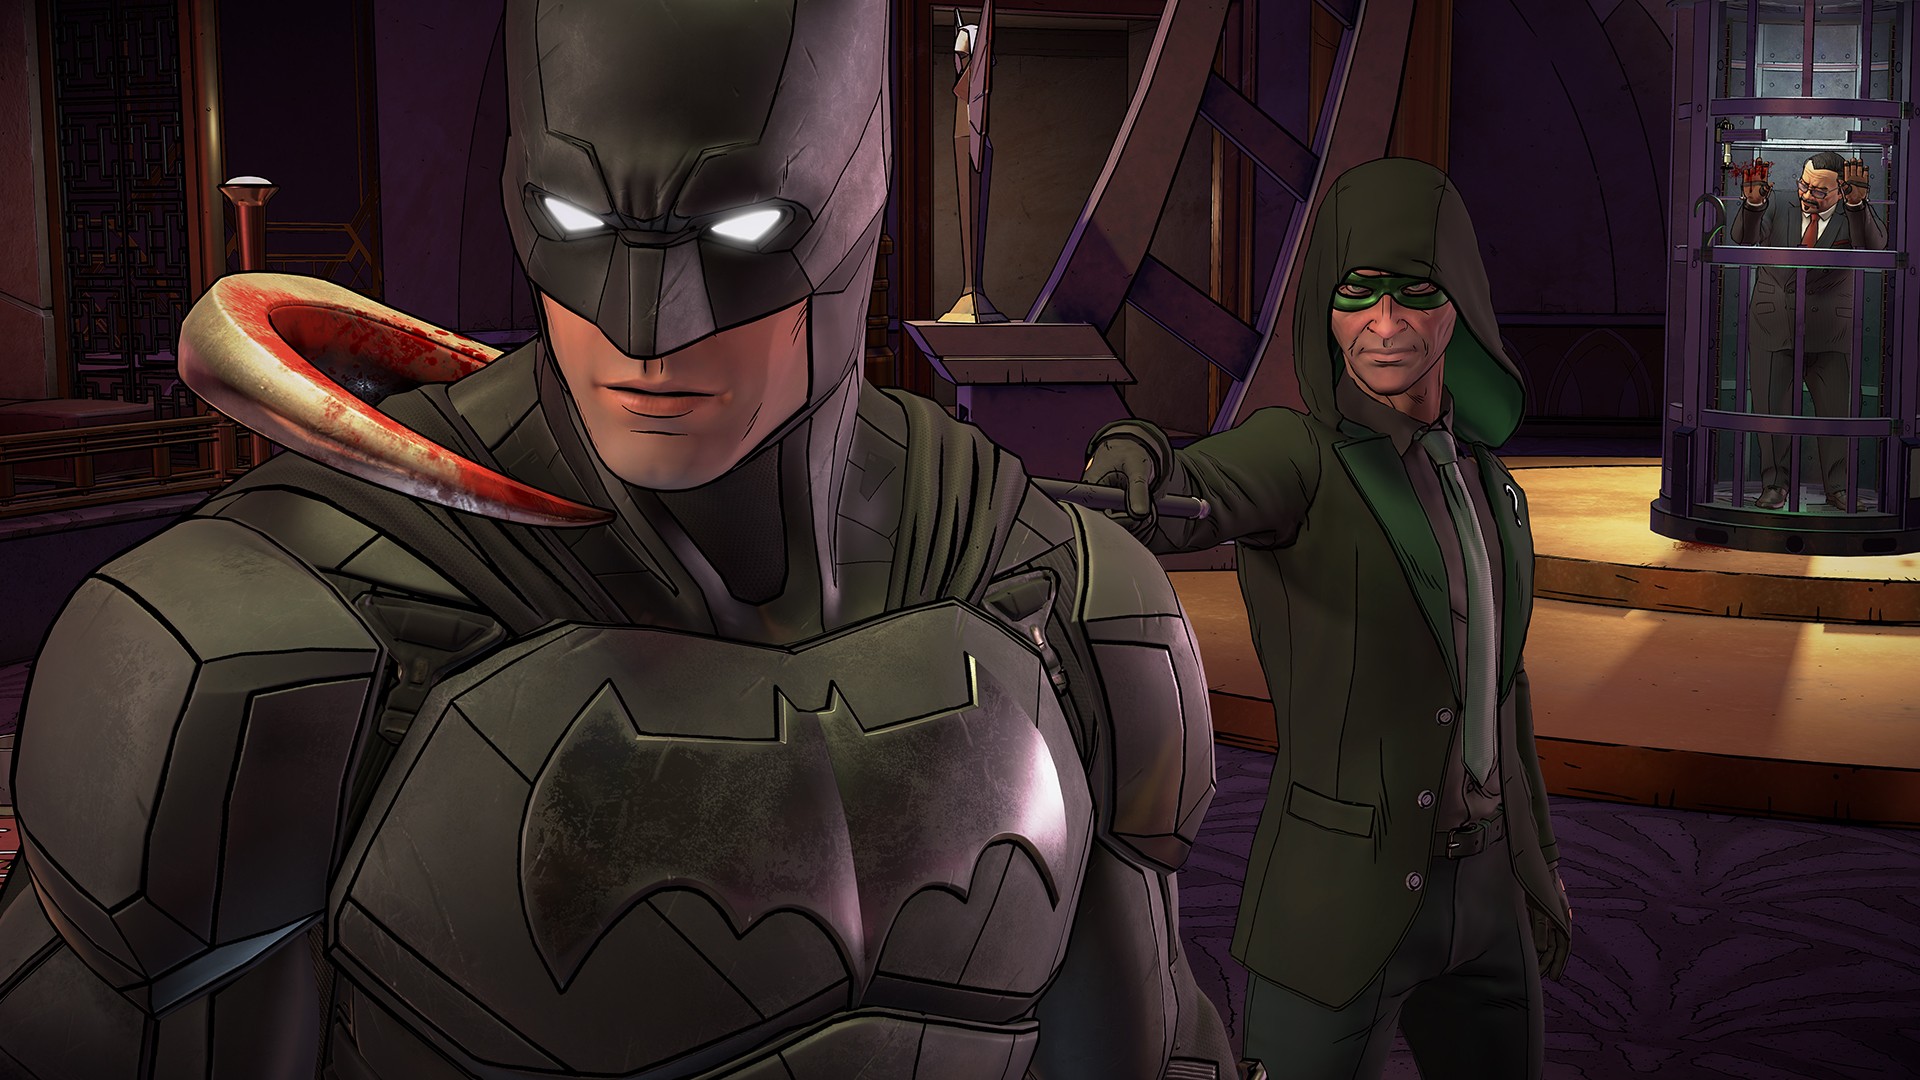 Comprar Batman: The Enemy Within - The Telltale Series Steam